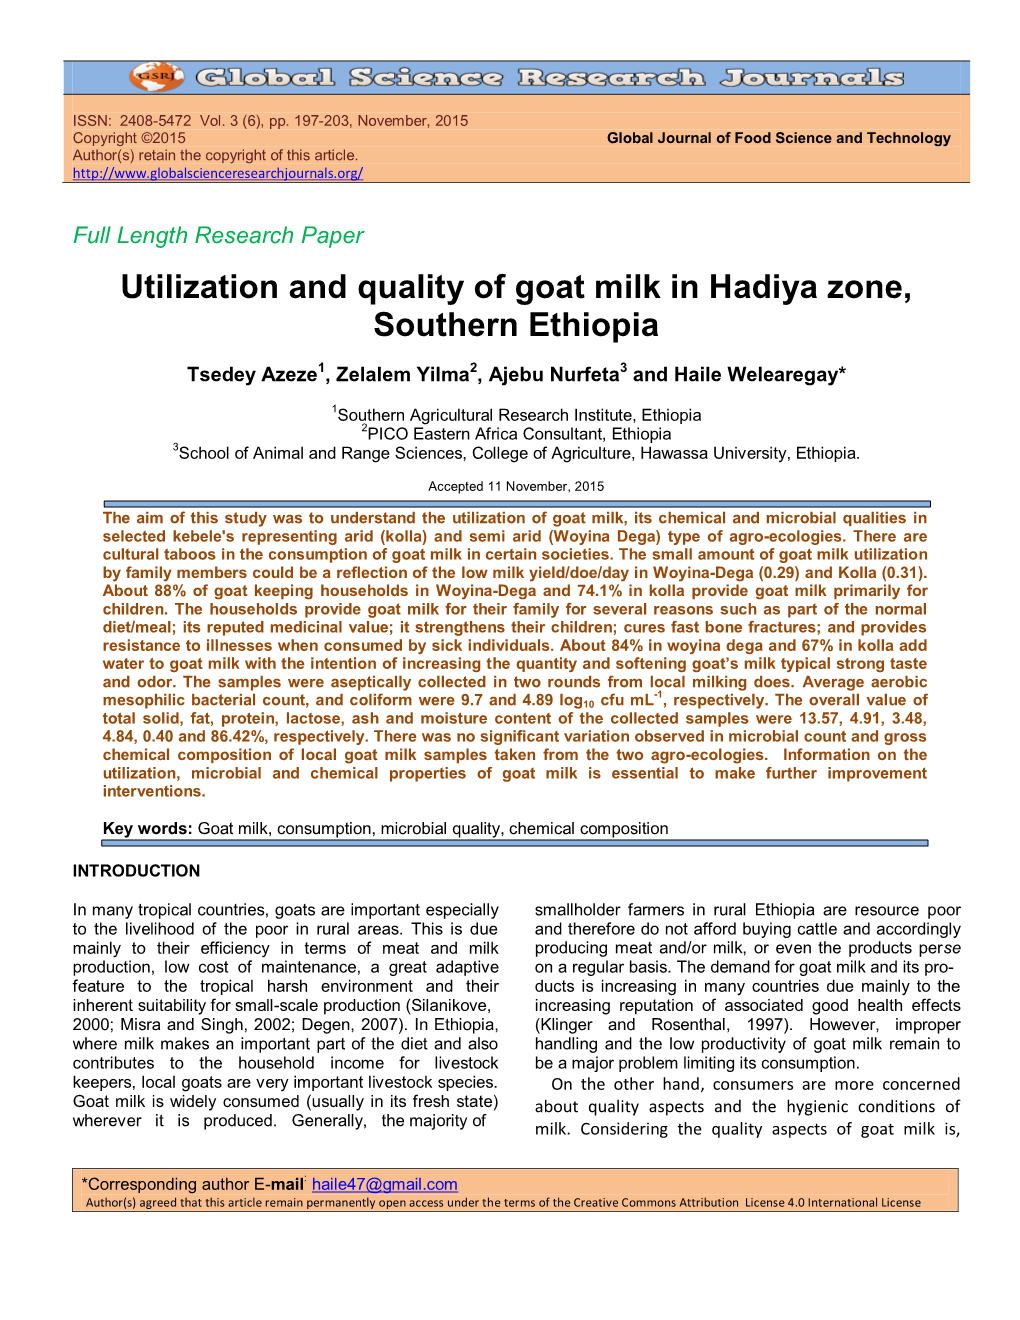 Utilization and Quality of Goat Milk in Hadiya Zone, Southern Ethiopia